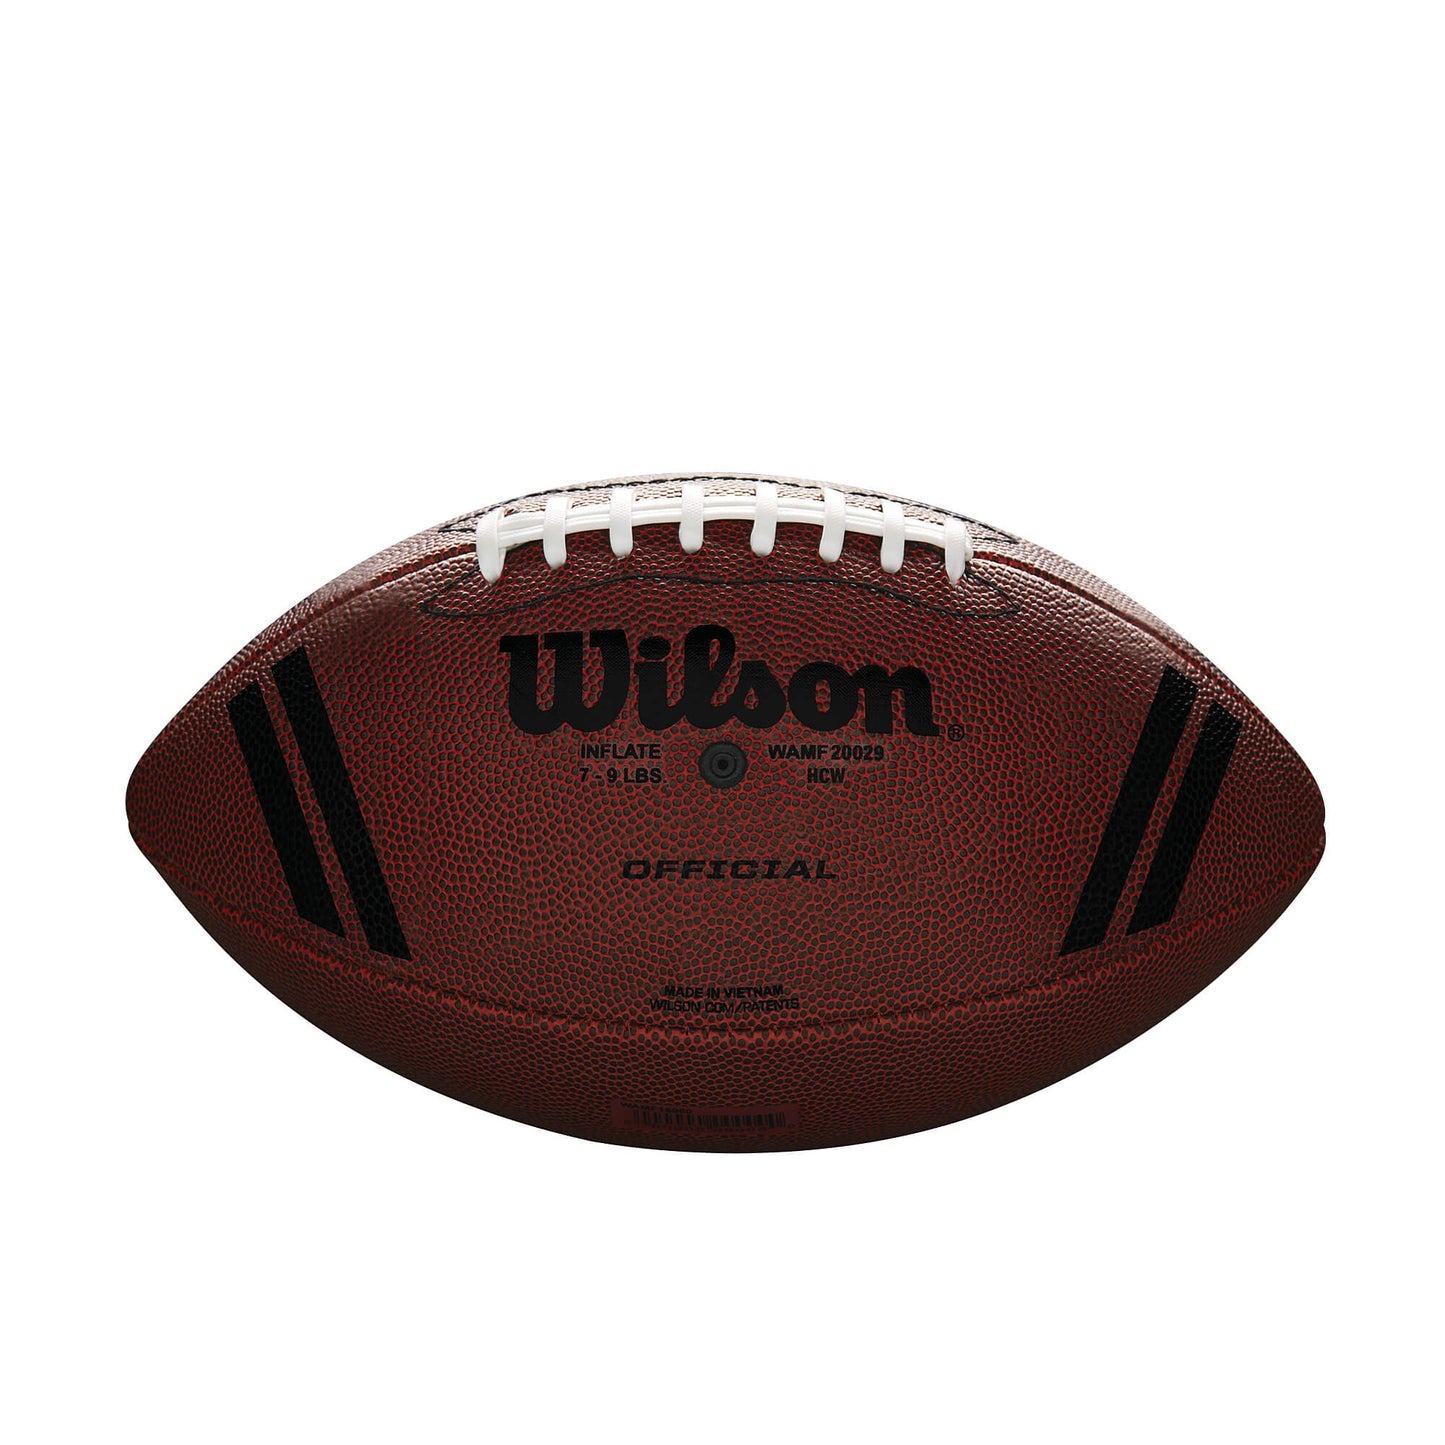 Wilson NFL Spotlight Fb Off (sz. Official) Brown